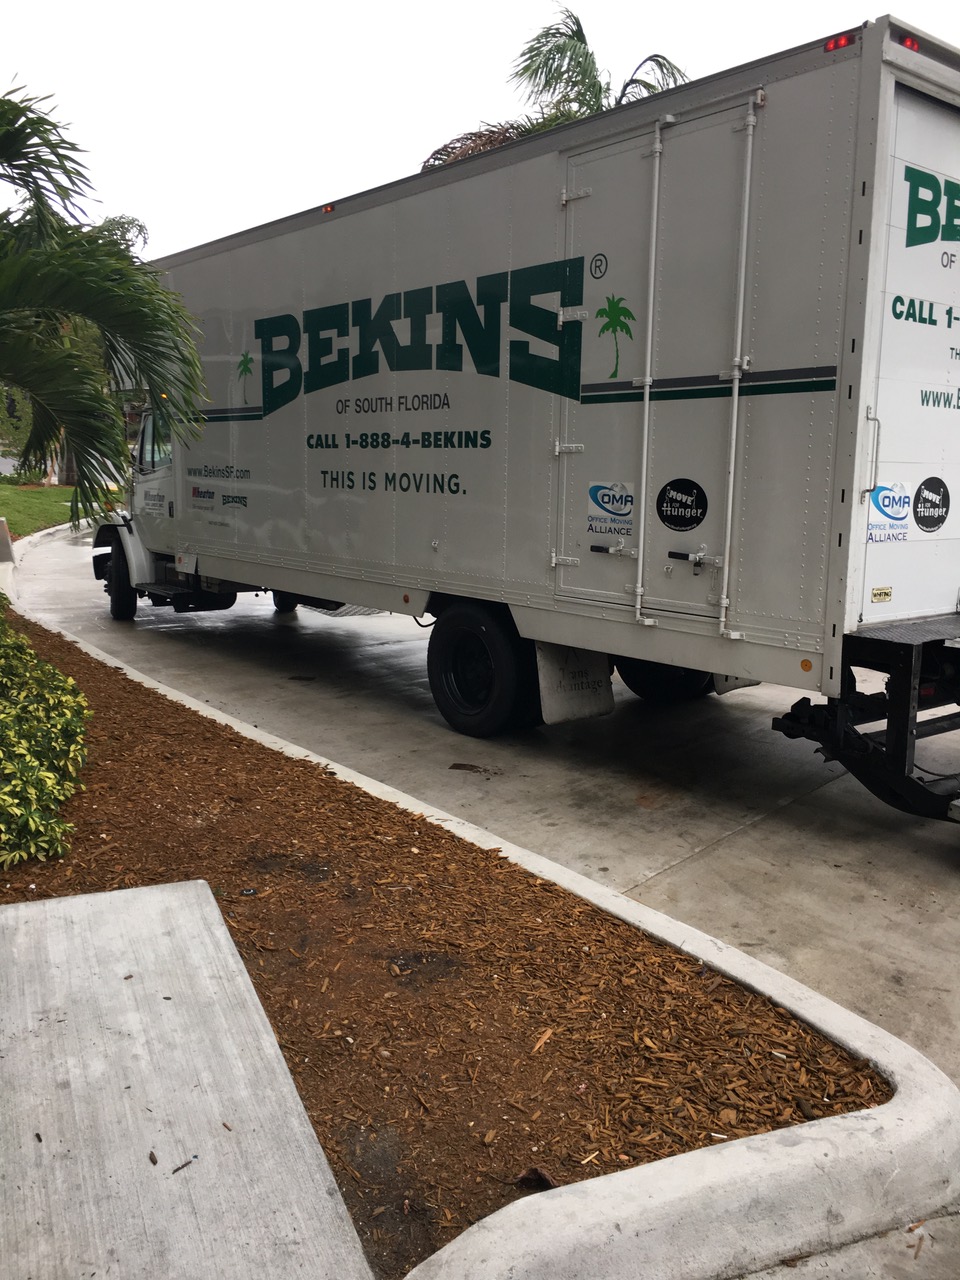 Bekins of South Florida truck